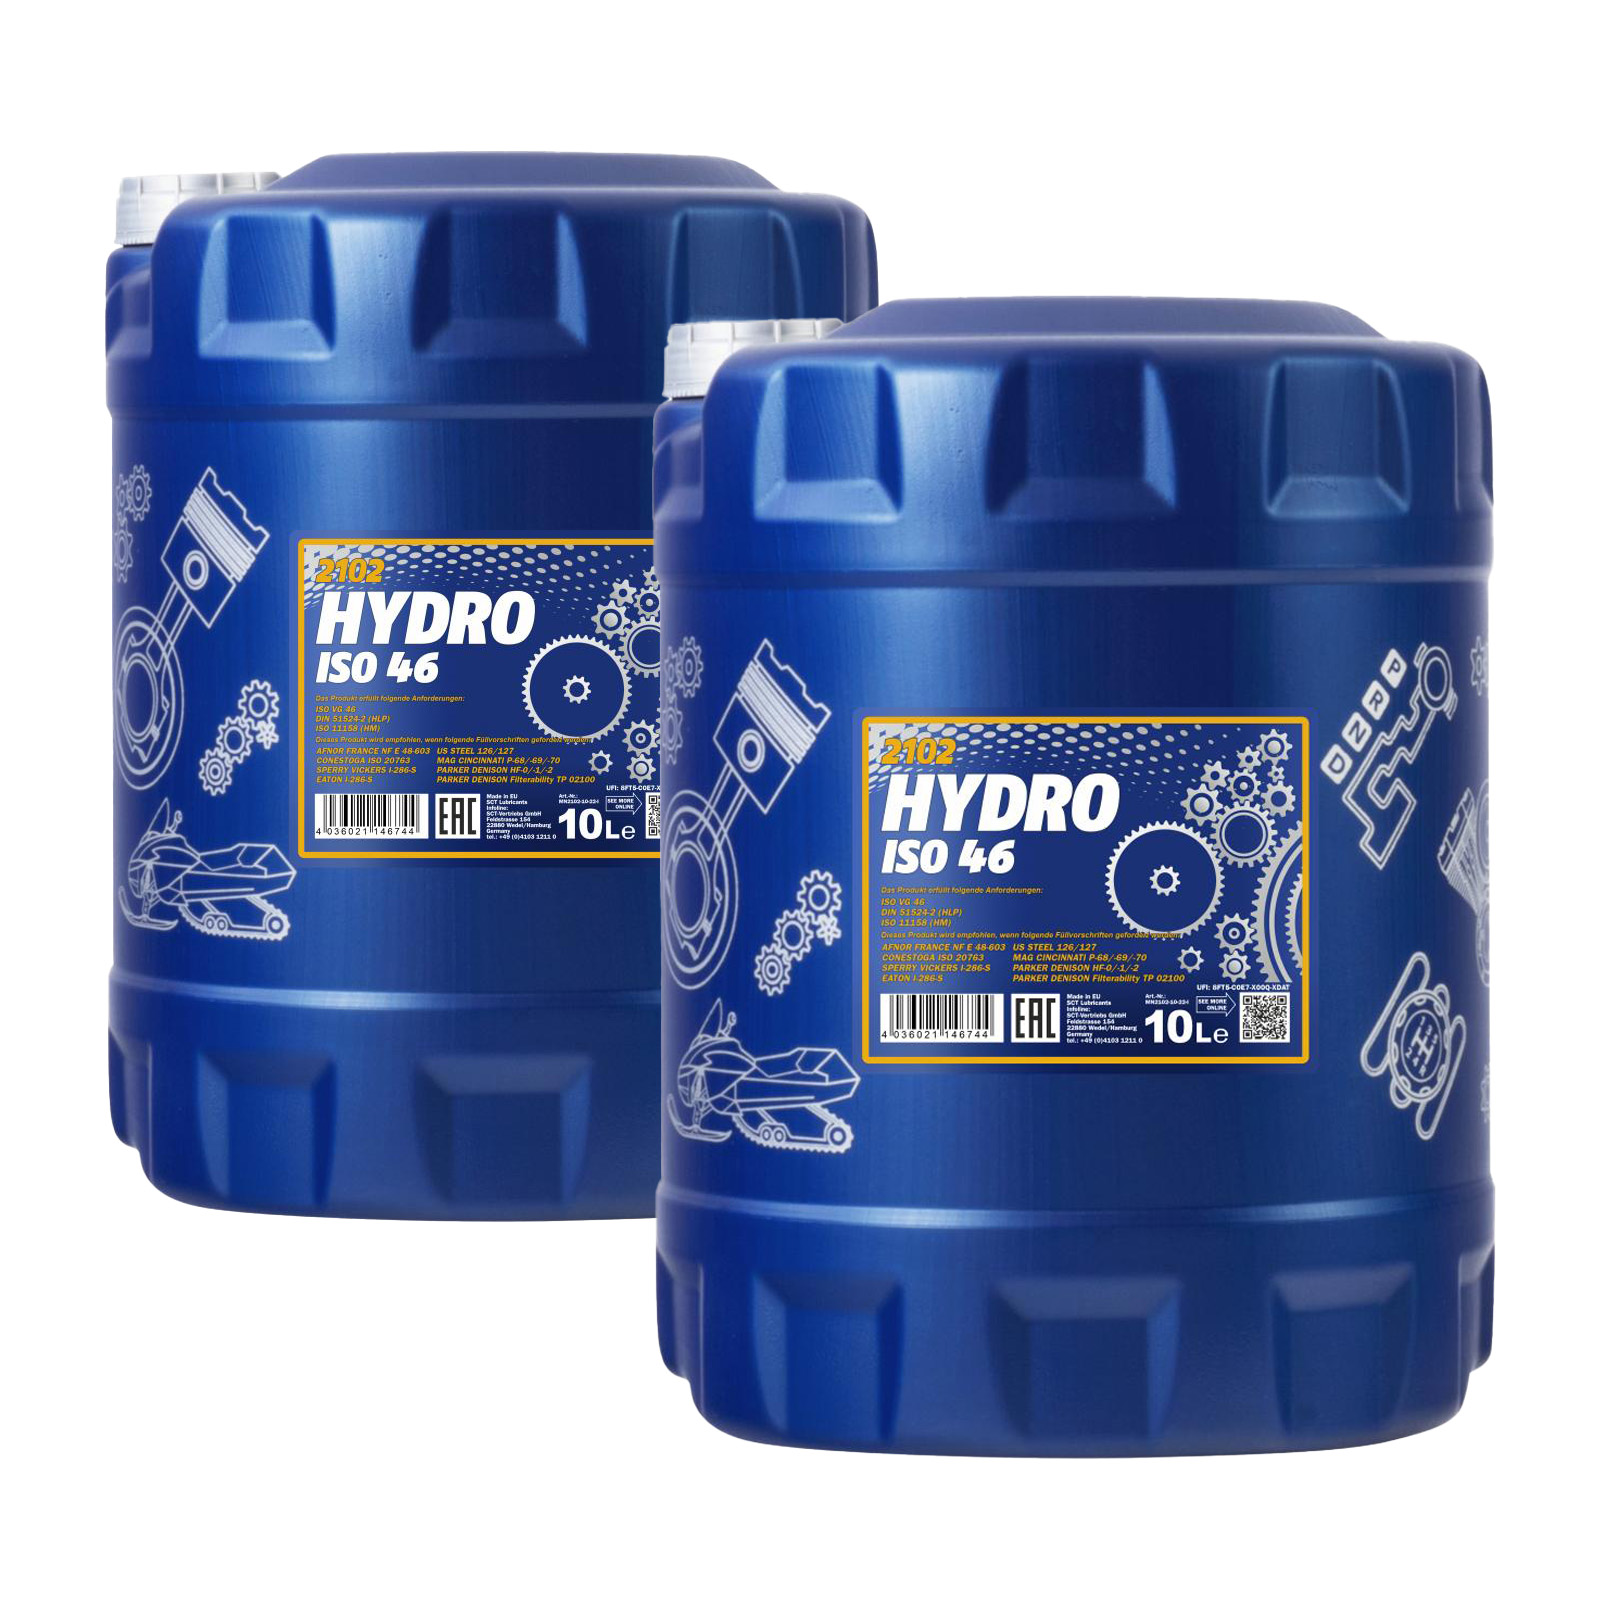 20 Liter (2x10) MANNOL MN2102 HYDRO ISO HLP 46 Hydrauliköl DIN 51524 VDMA 24318